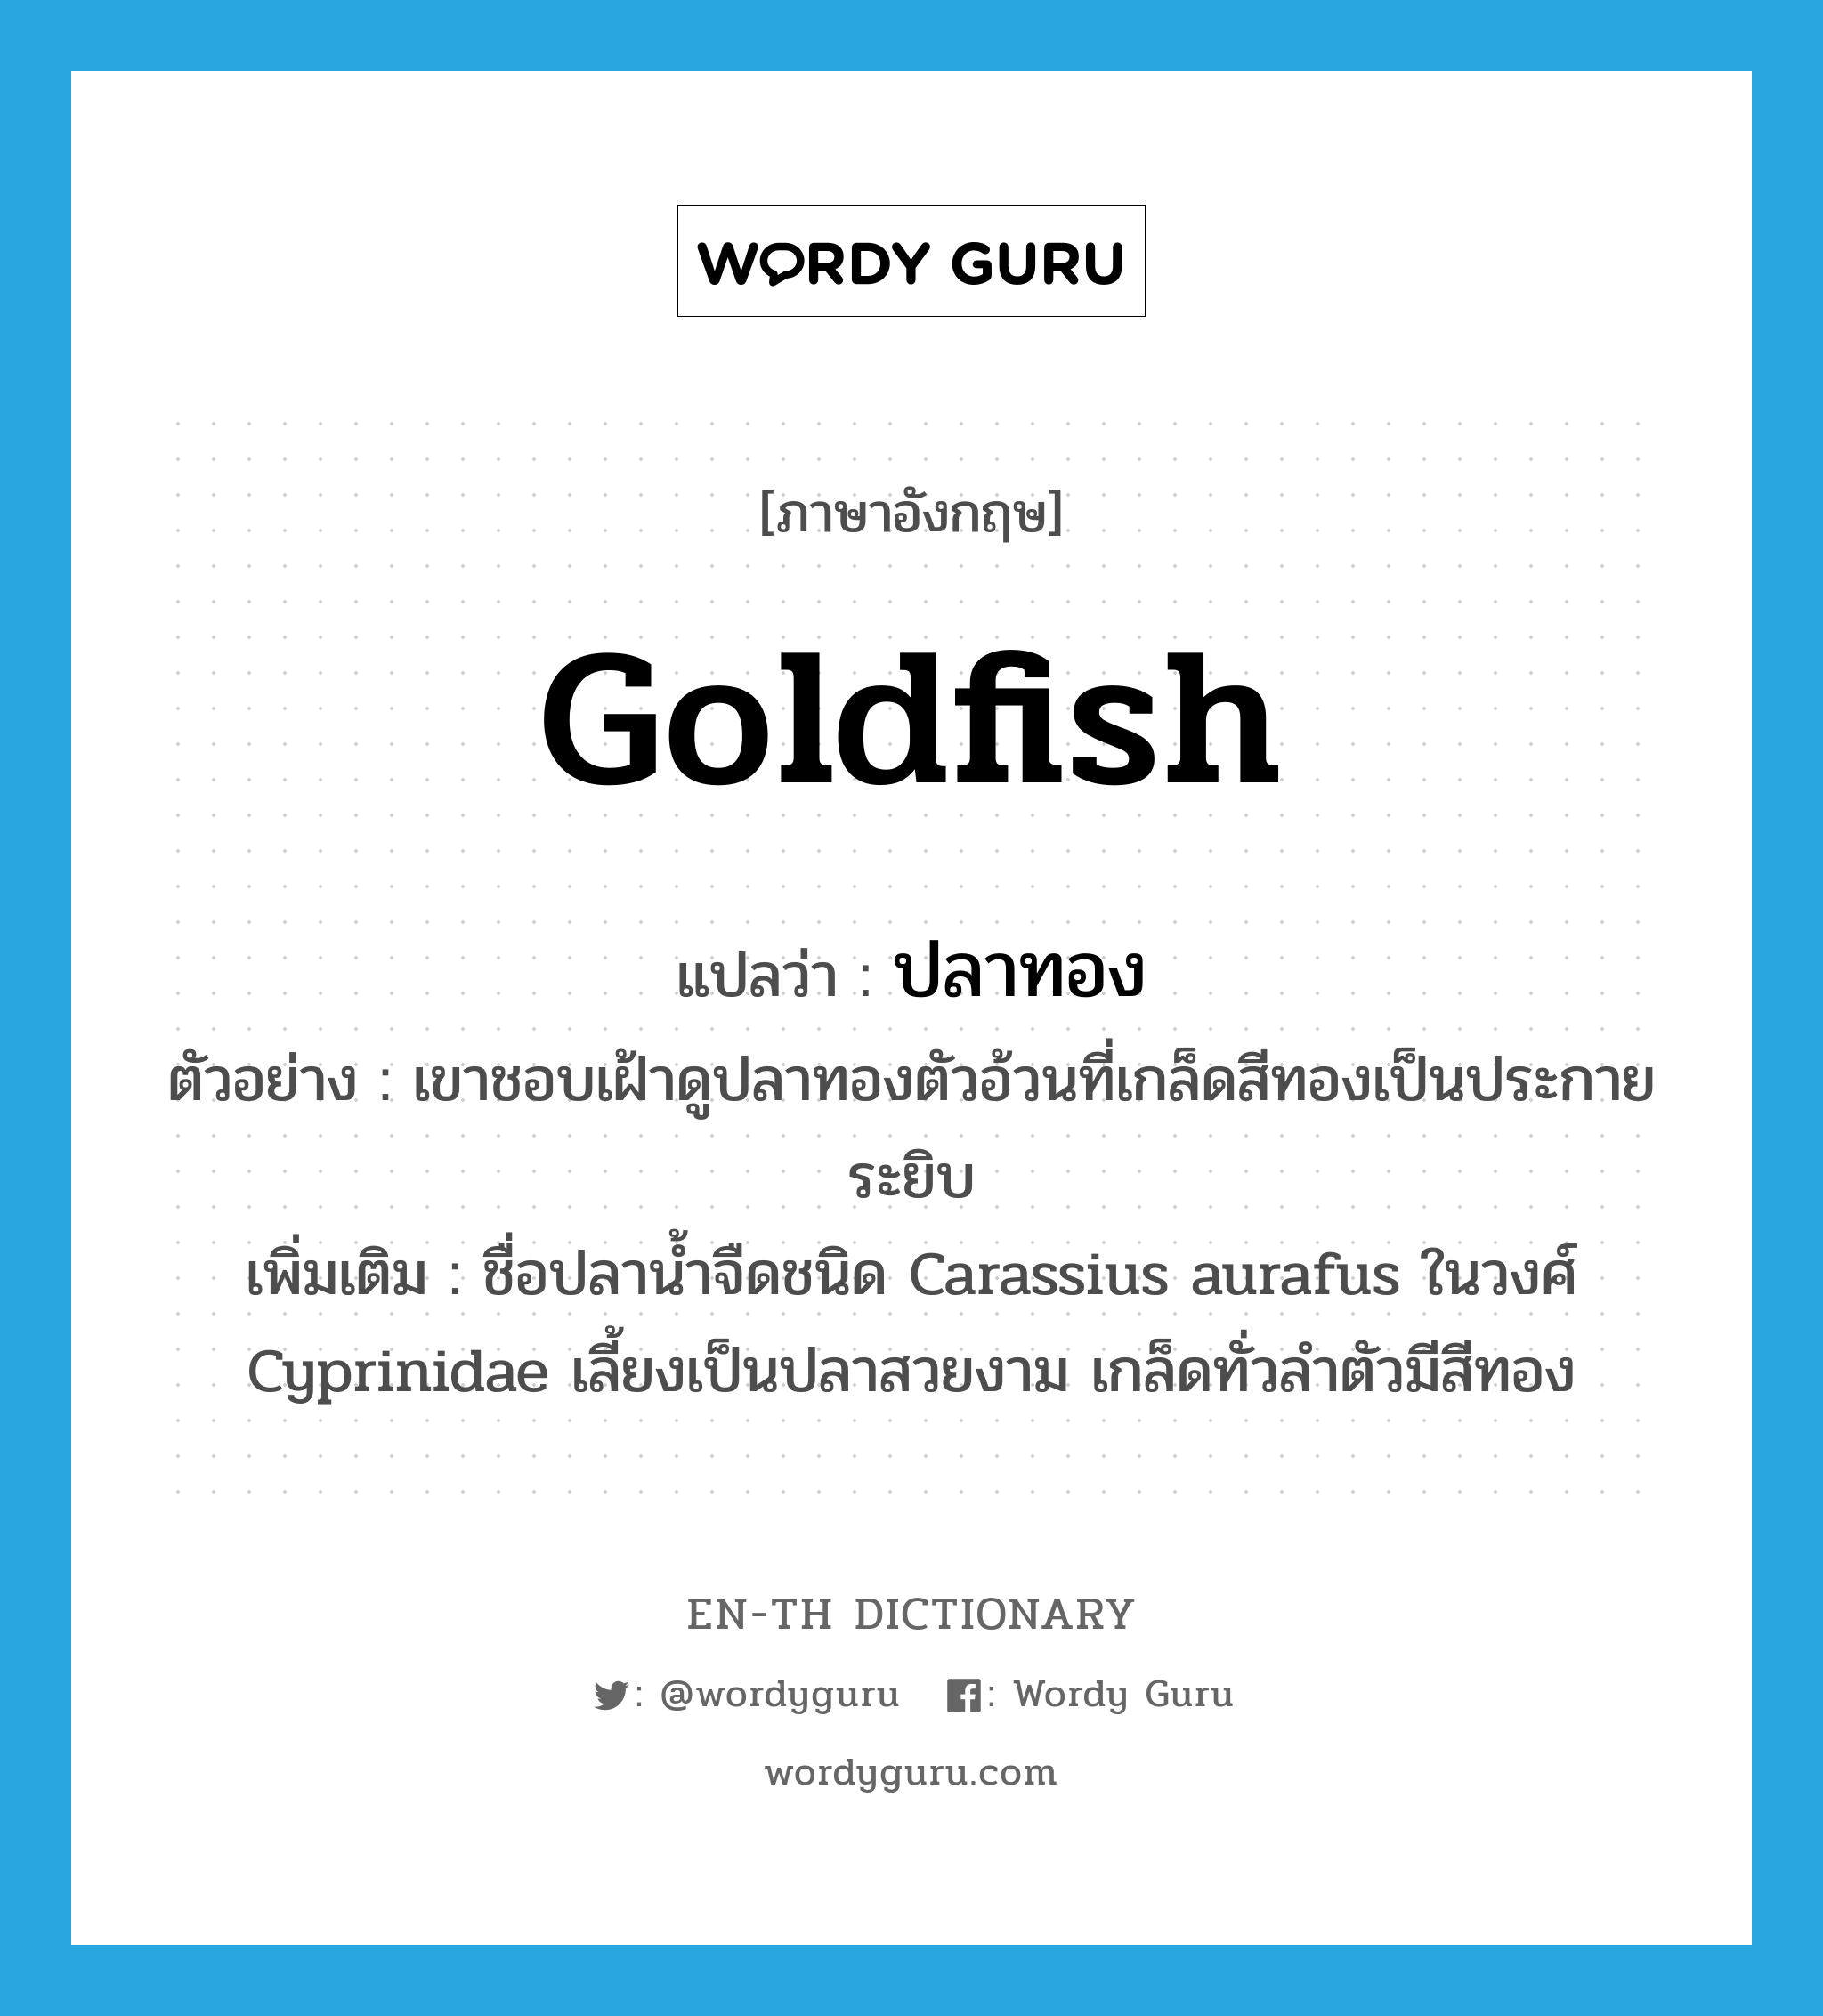 goldfish แปลว่า?, คำศัพท์ภาษาอังกฤษ goldfish แปลว่า ปลาทอง ประเภท N ตัวอย่าง เขาชอบเฝ้าดูปลาทองตัวอ้วนที่เกล็ดสีทองเป็นประกายระยิบ เพิ่มเติม ชื่อปลาน้ำจืดชนิด Carassius aurafus ในวงศ์ Cyprinidae เลี้ยงเป็นปลาสวยงาม เกล็ดทั่วลำตัวมีสีทอง หมวด N